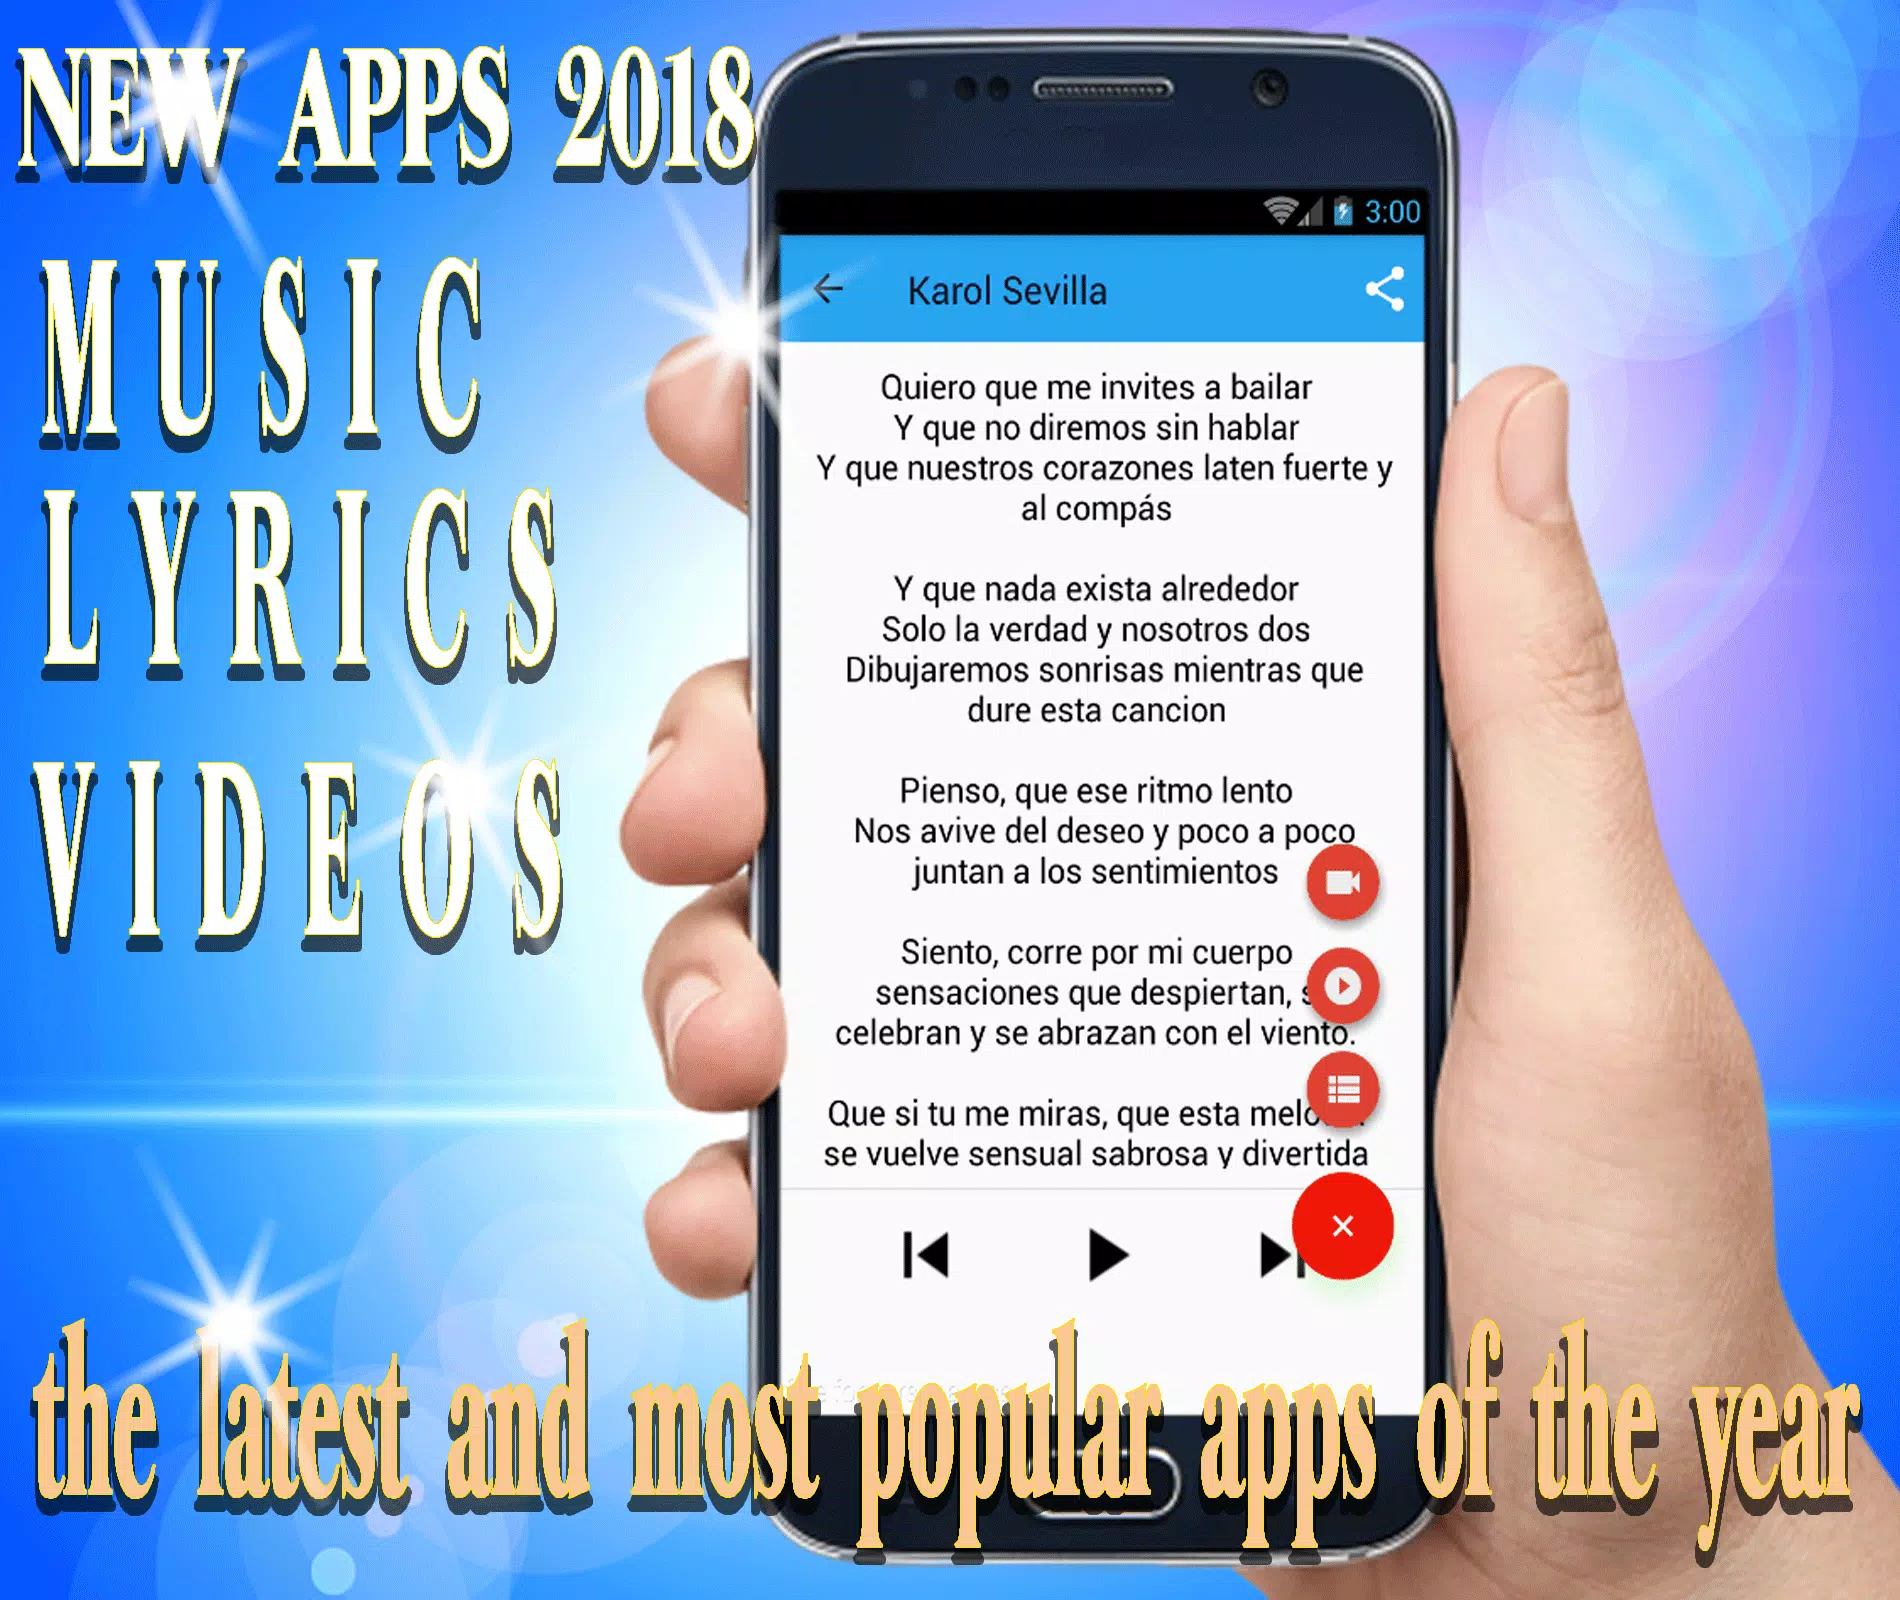 A Bailar - Karol Sevilla Top Songs APK for Android Download